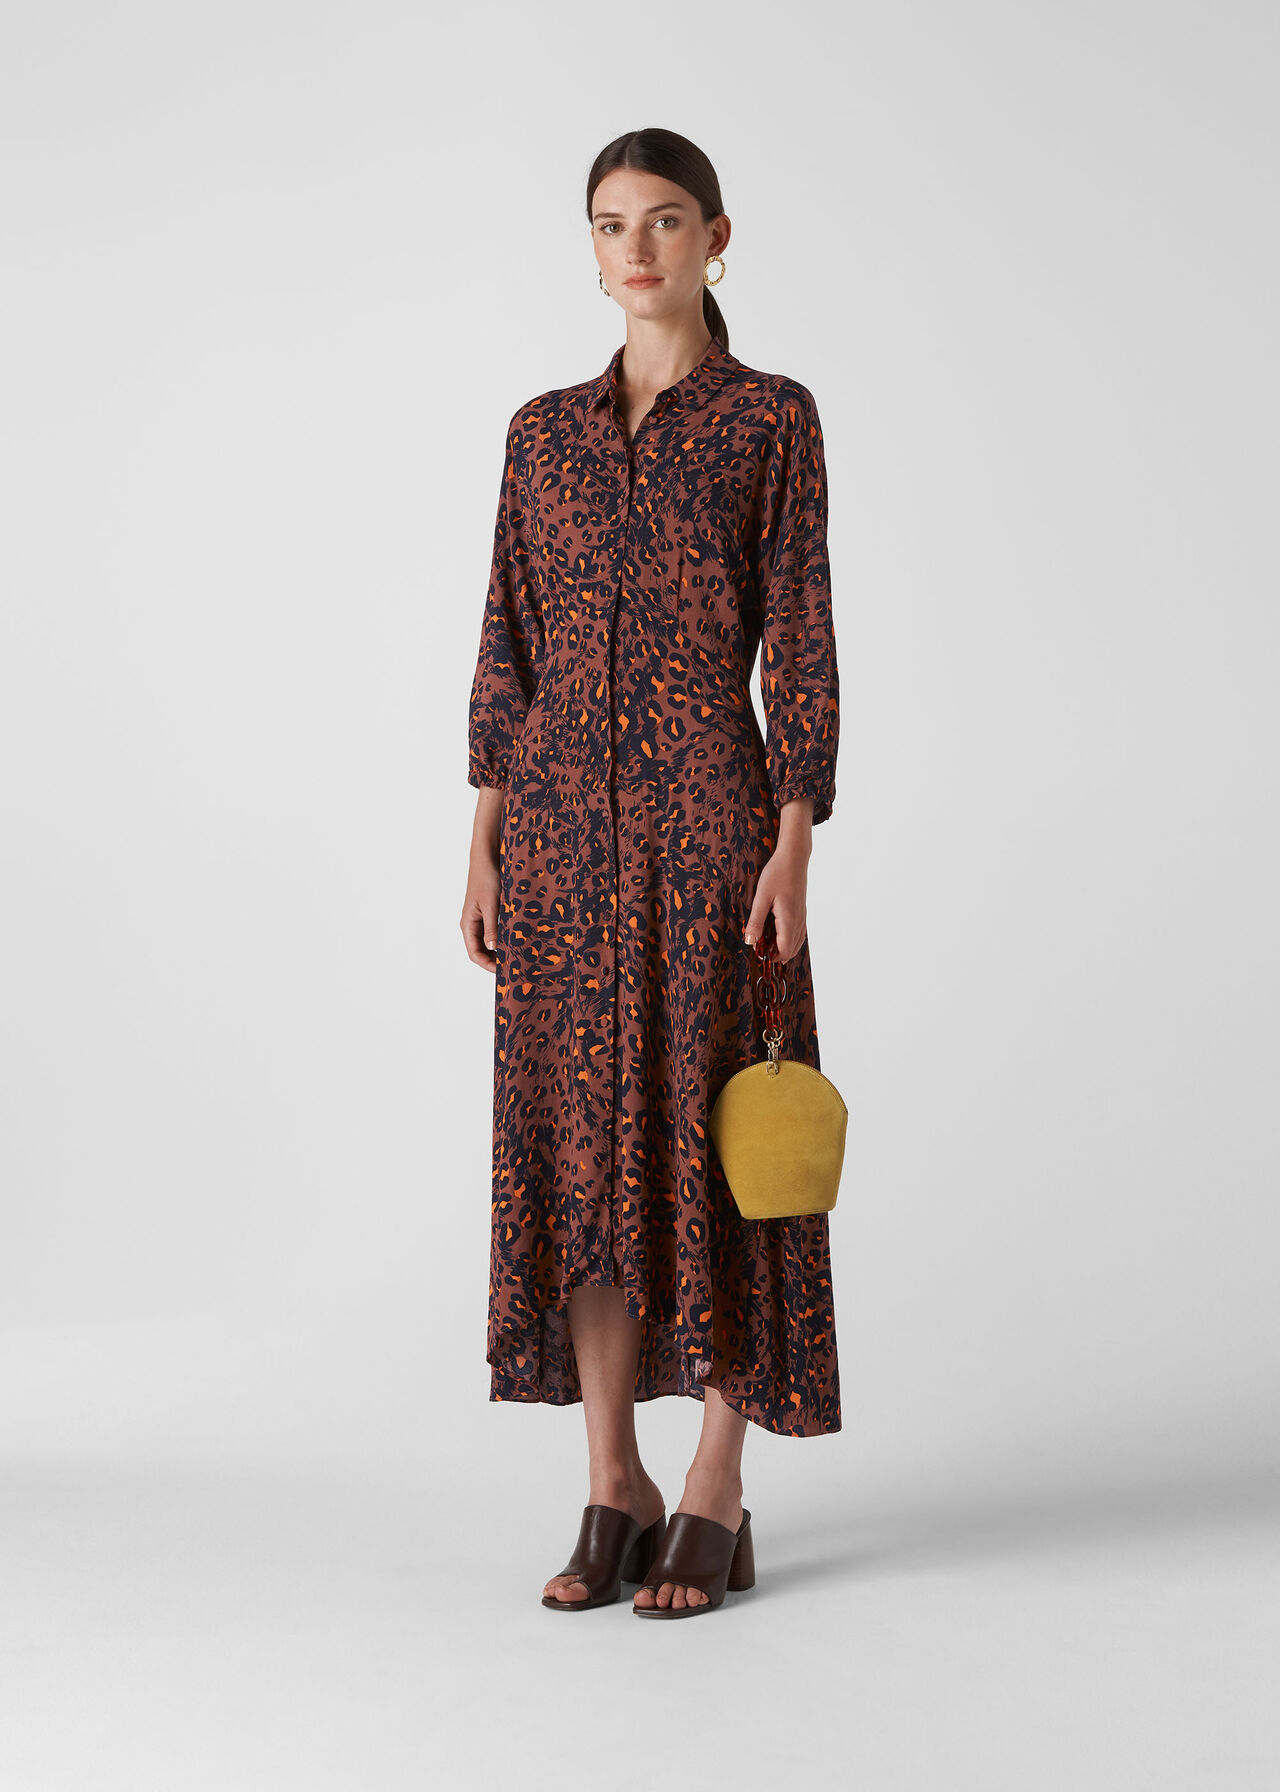 Amara Brushed Leopard Dress Brown/Multi